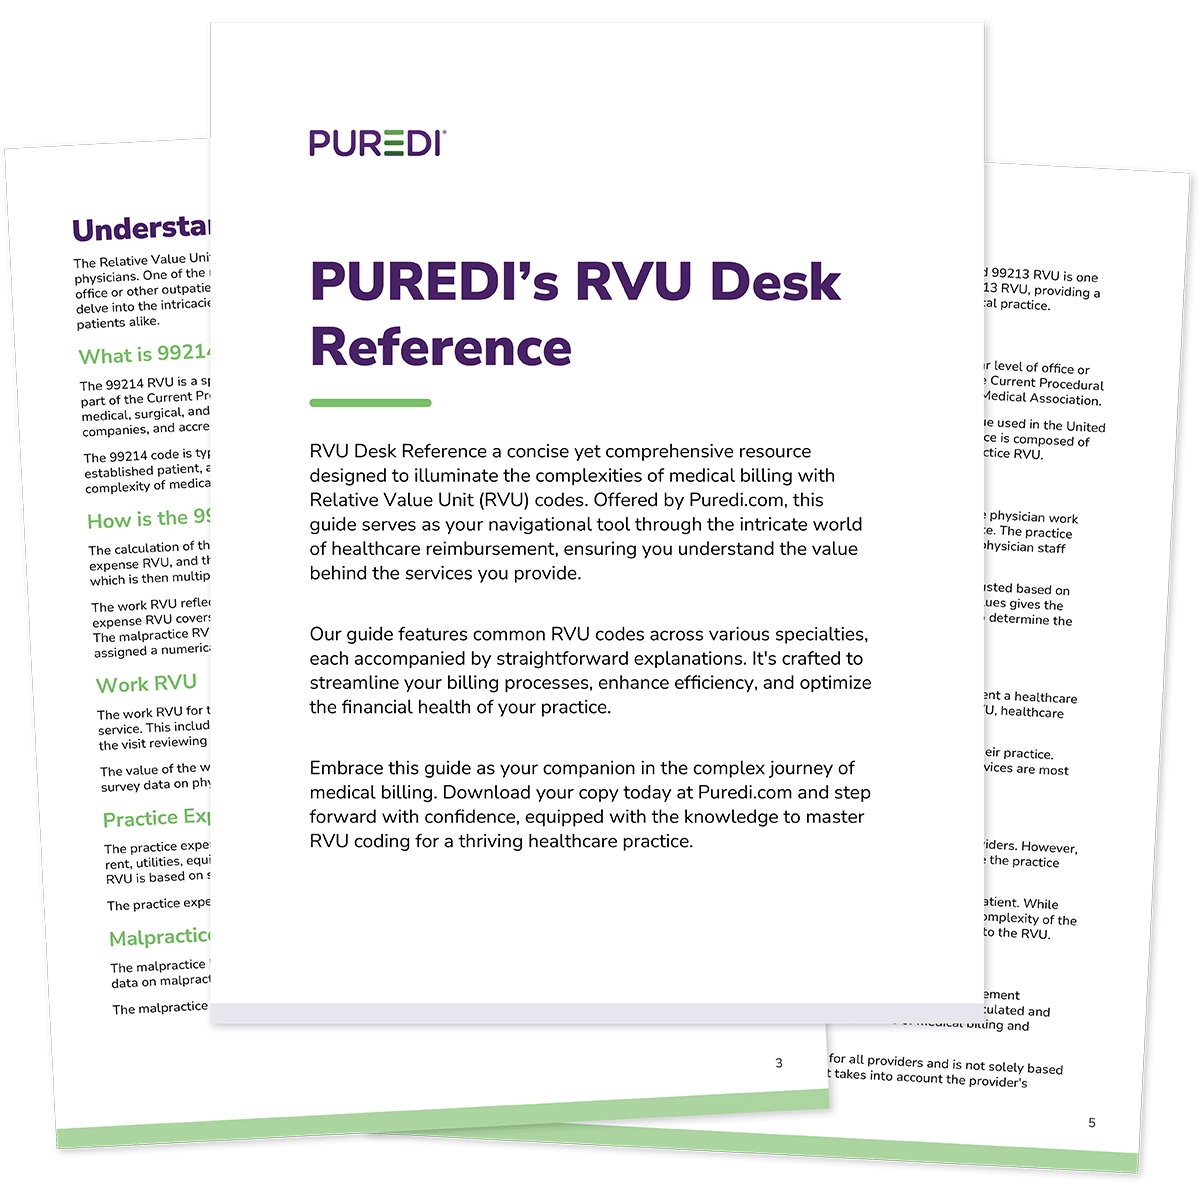 PUREDI RVU Desk Reference